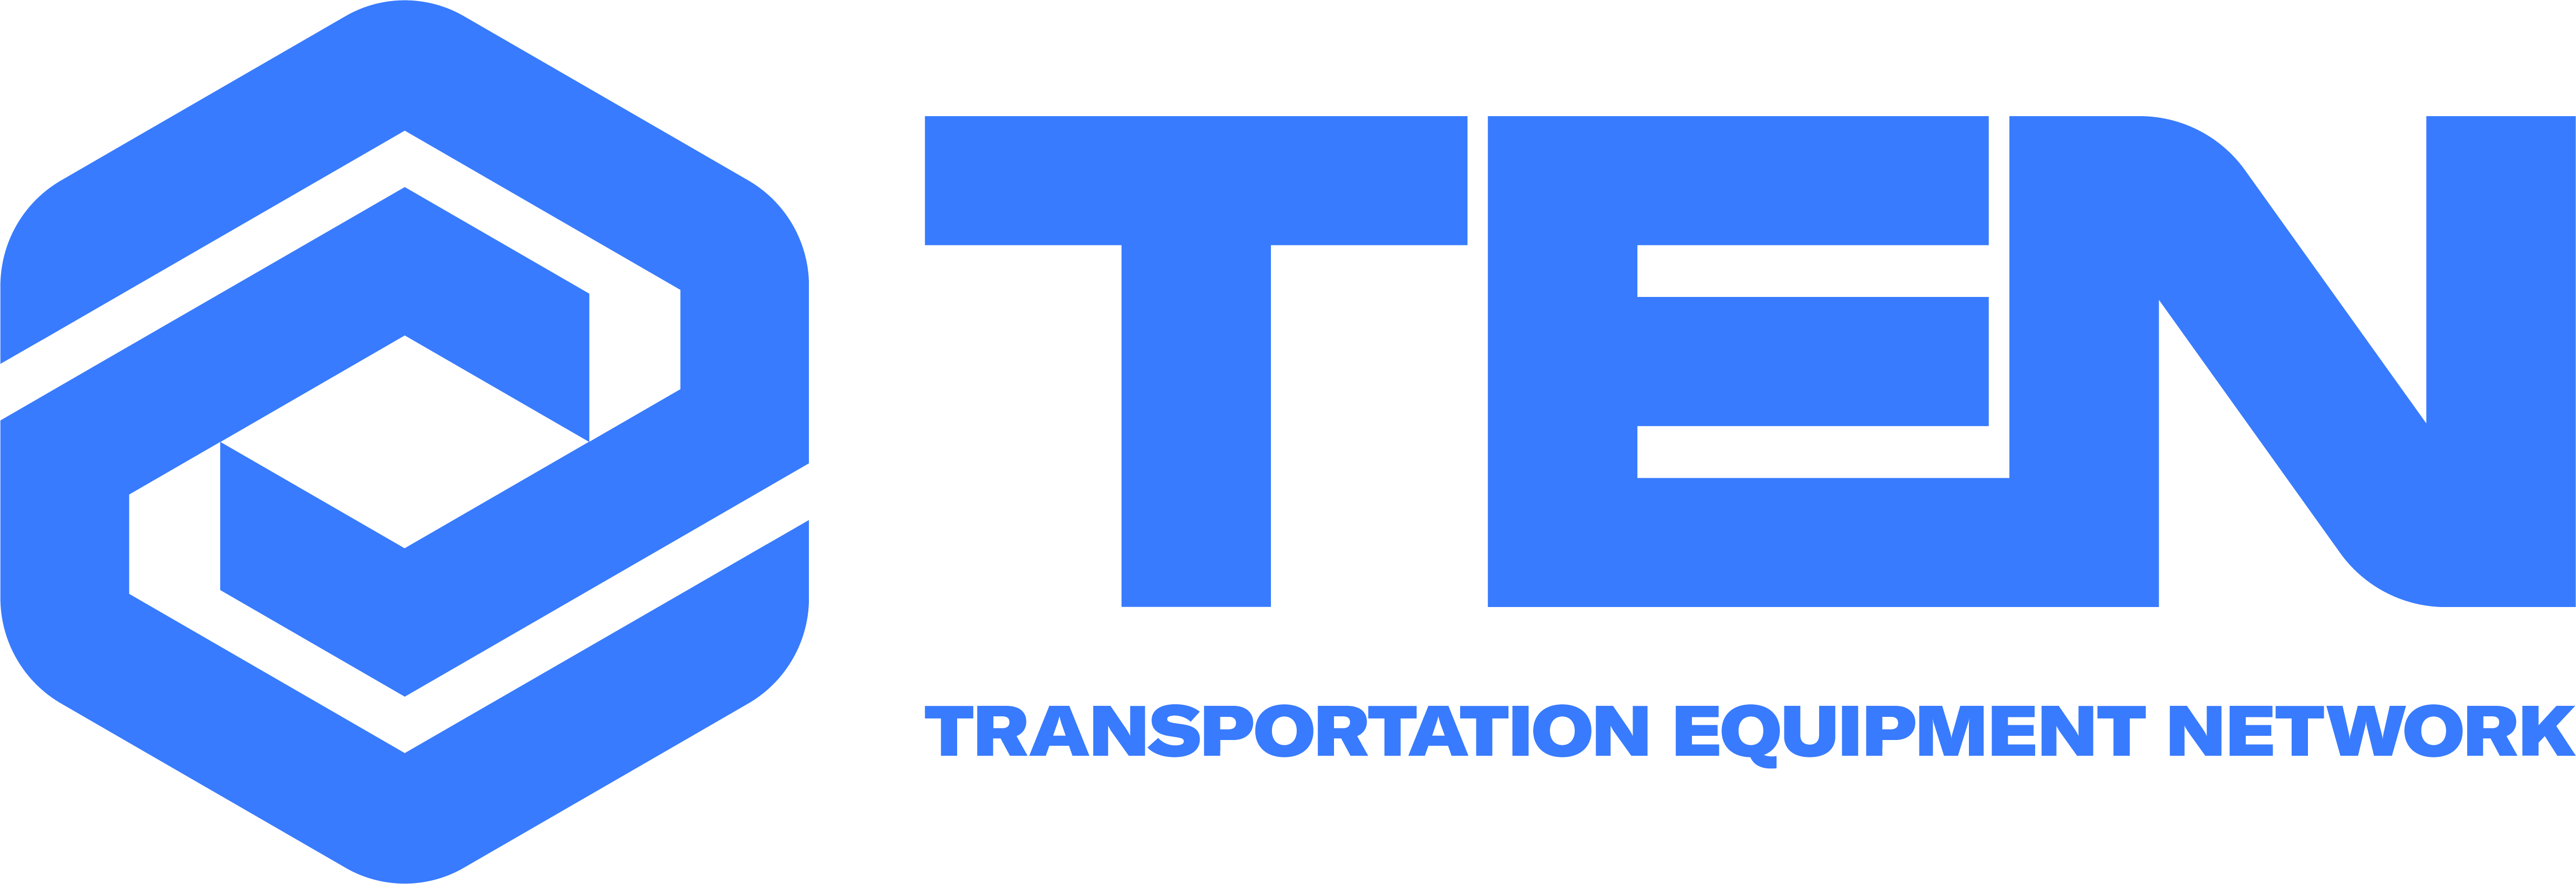 TEN: Transportation Equipment Network